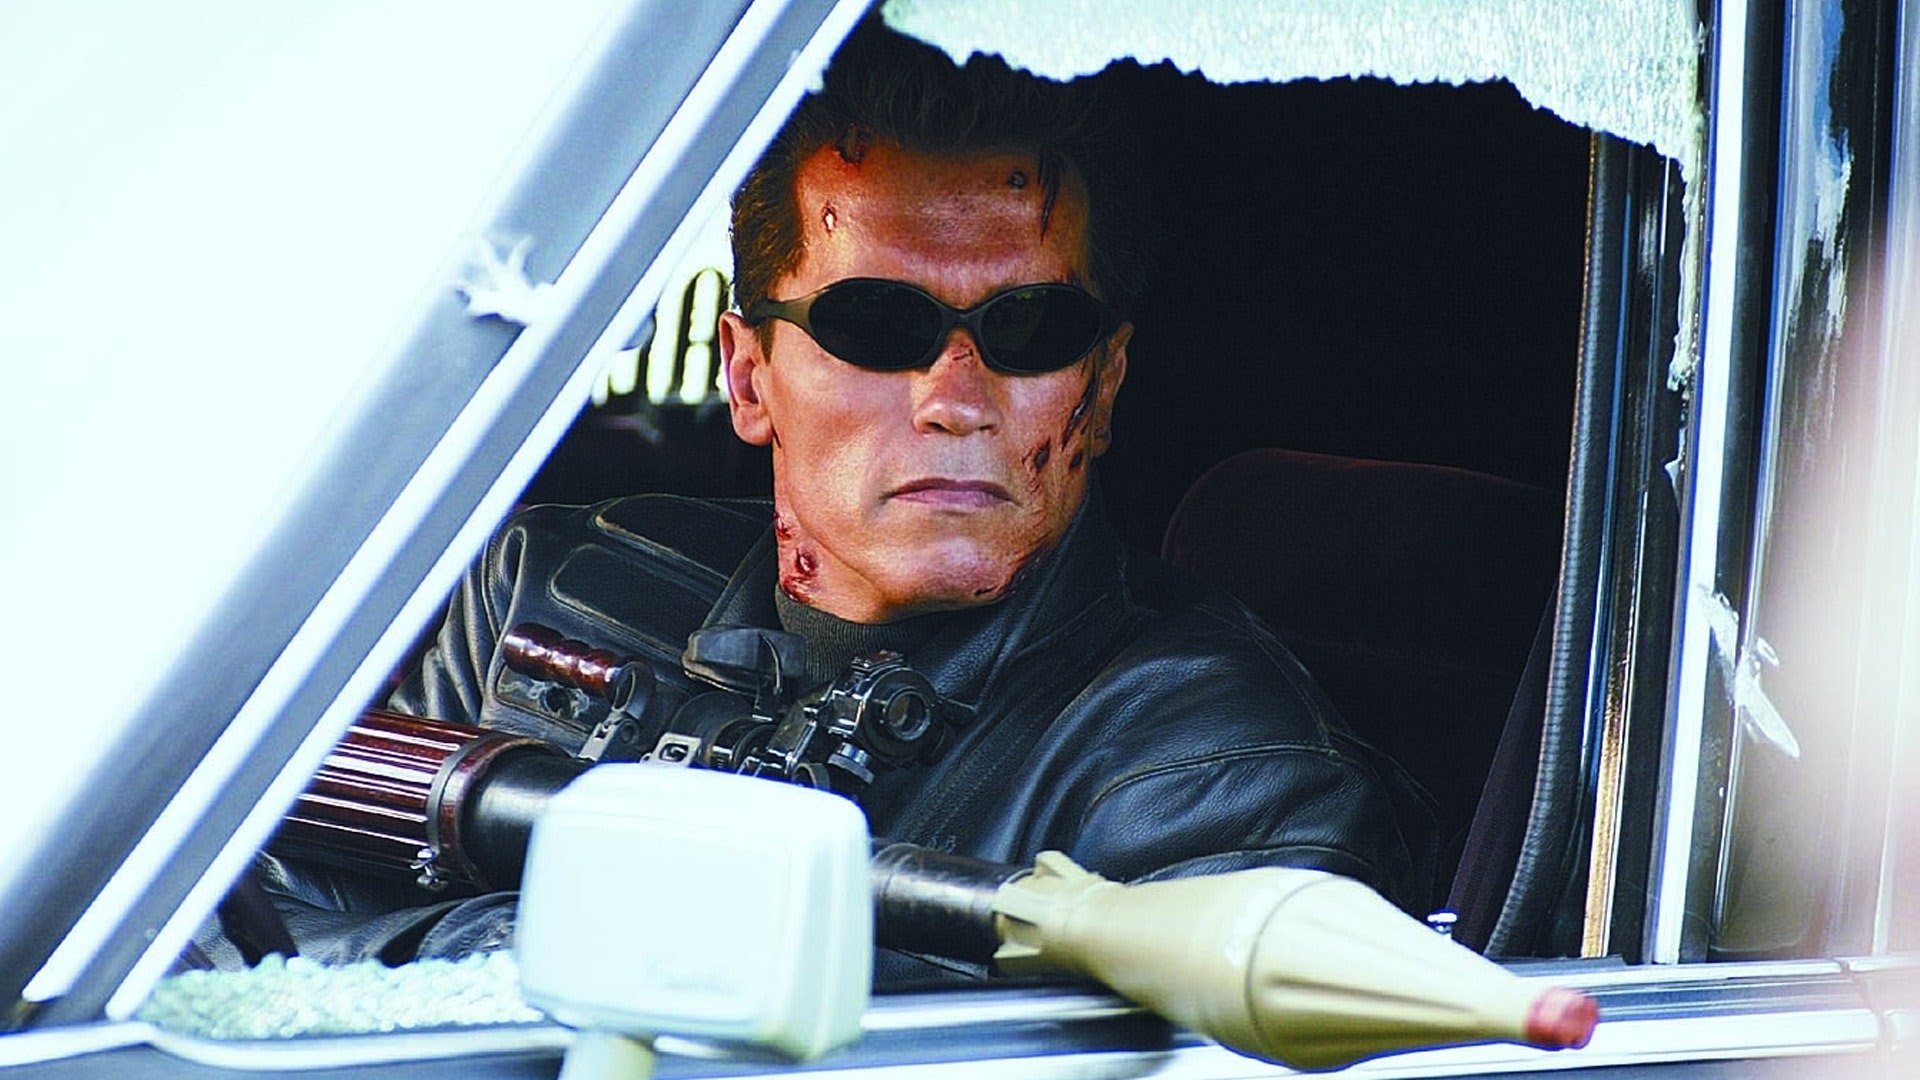 Arnold Schwarzenegger aims a rocket launcher out of a car window.